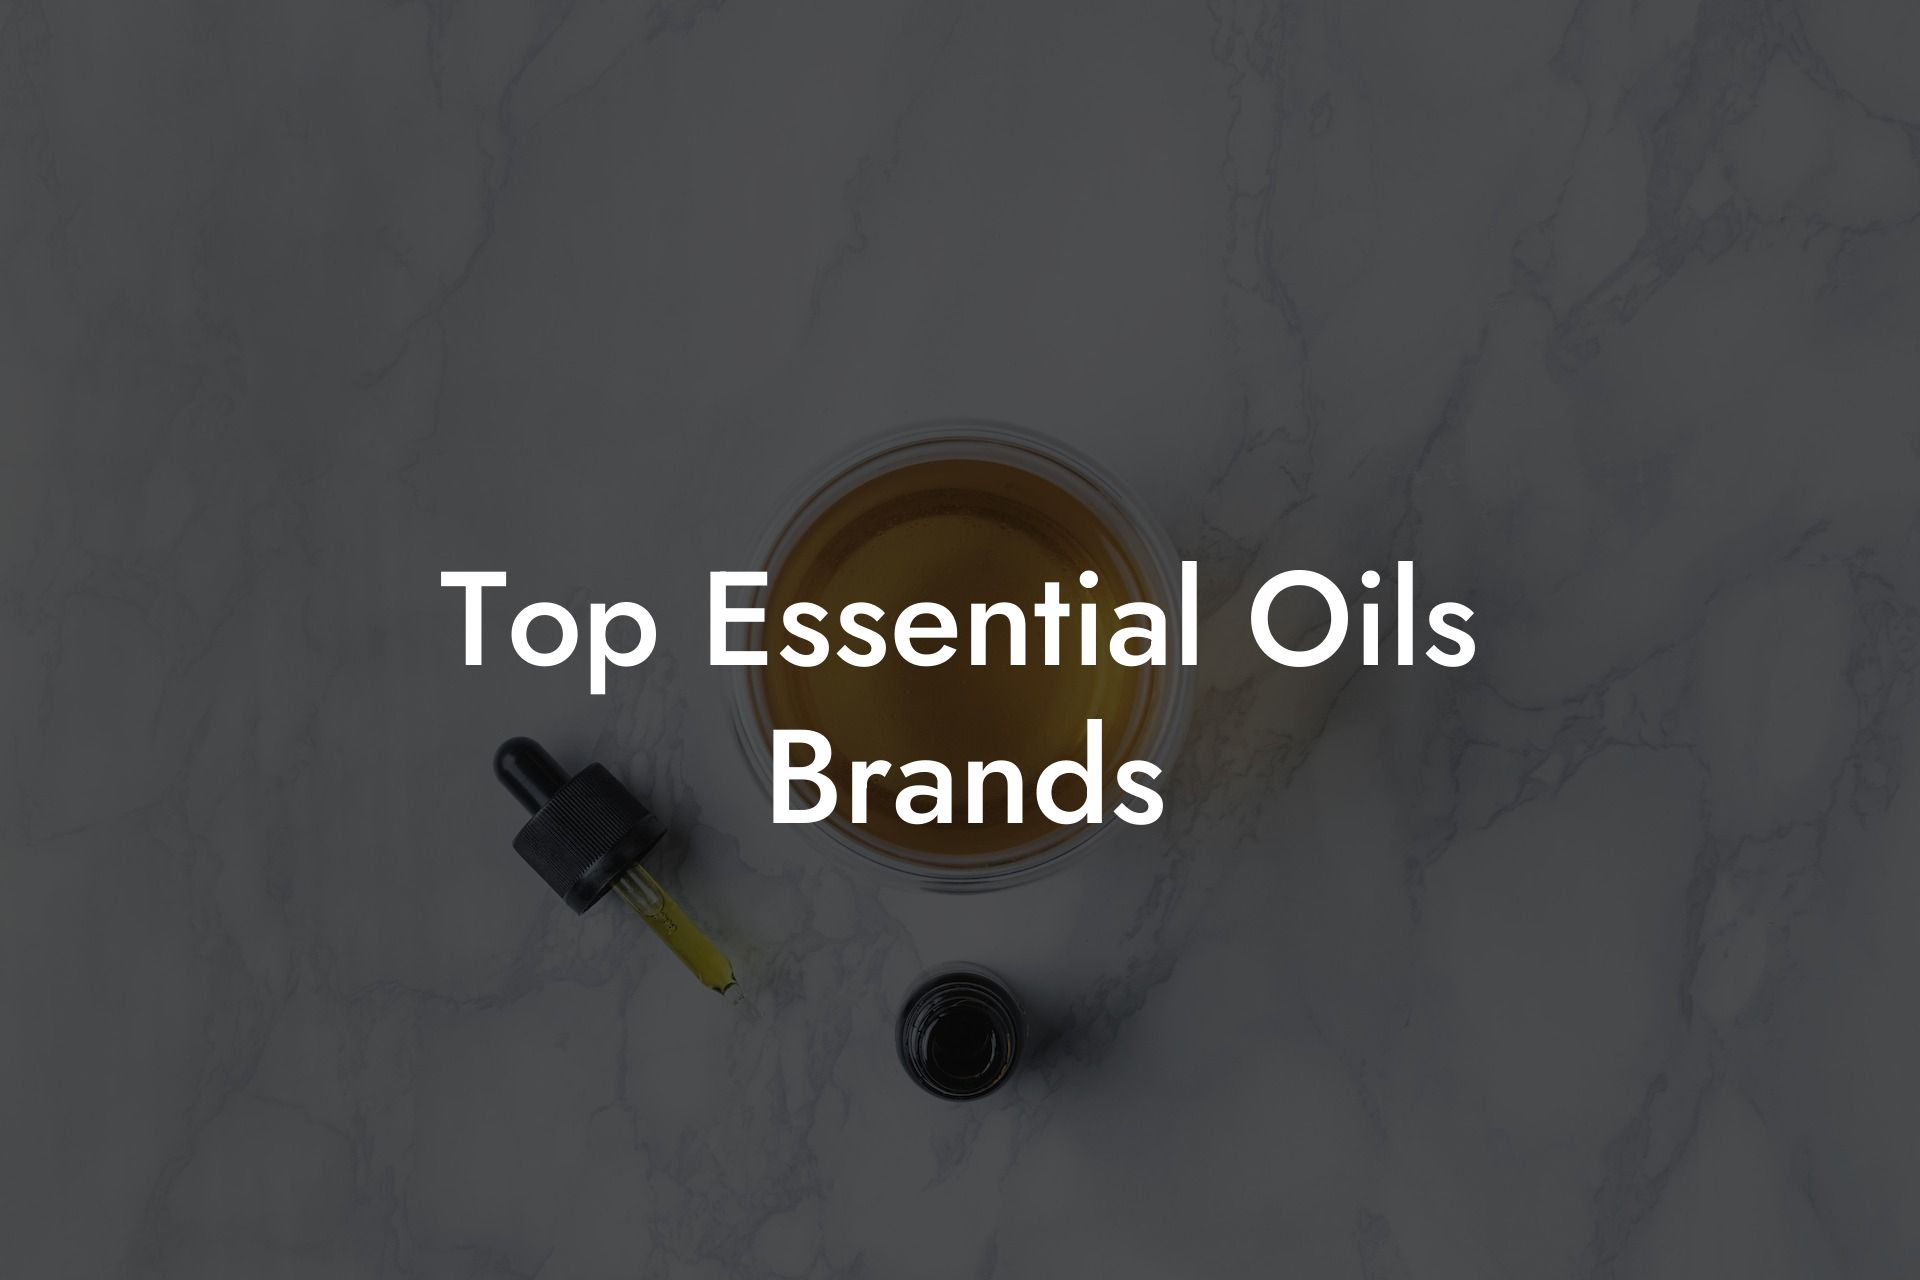 Top Essential Oils Brands